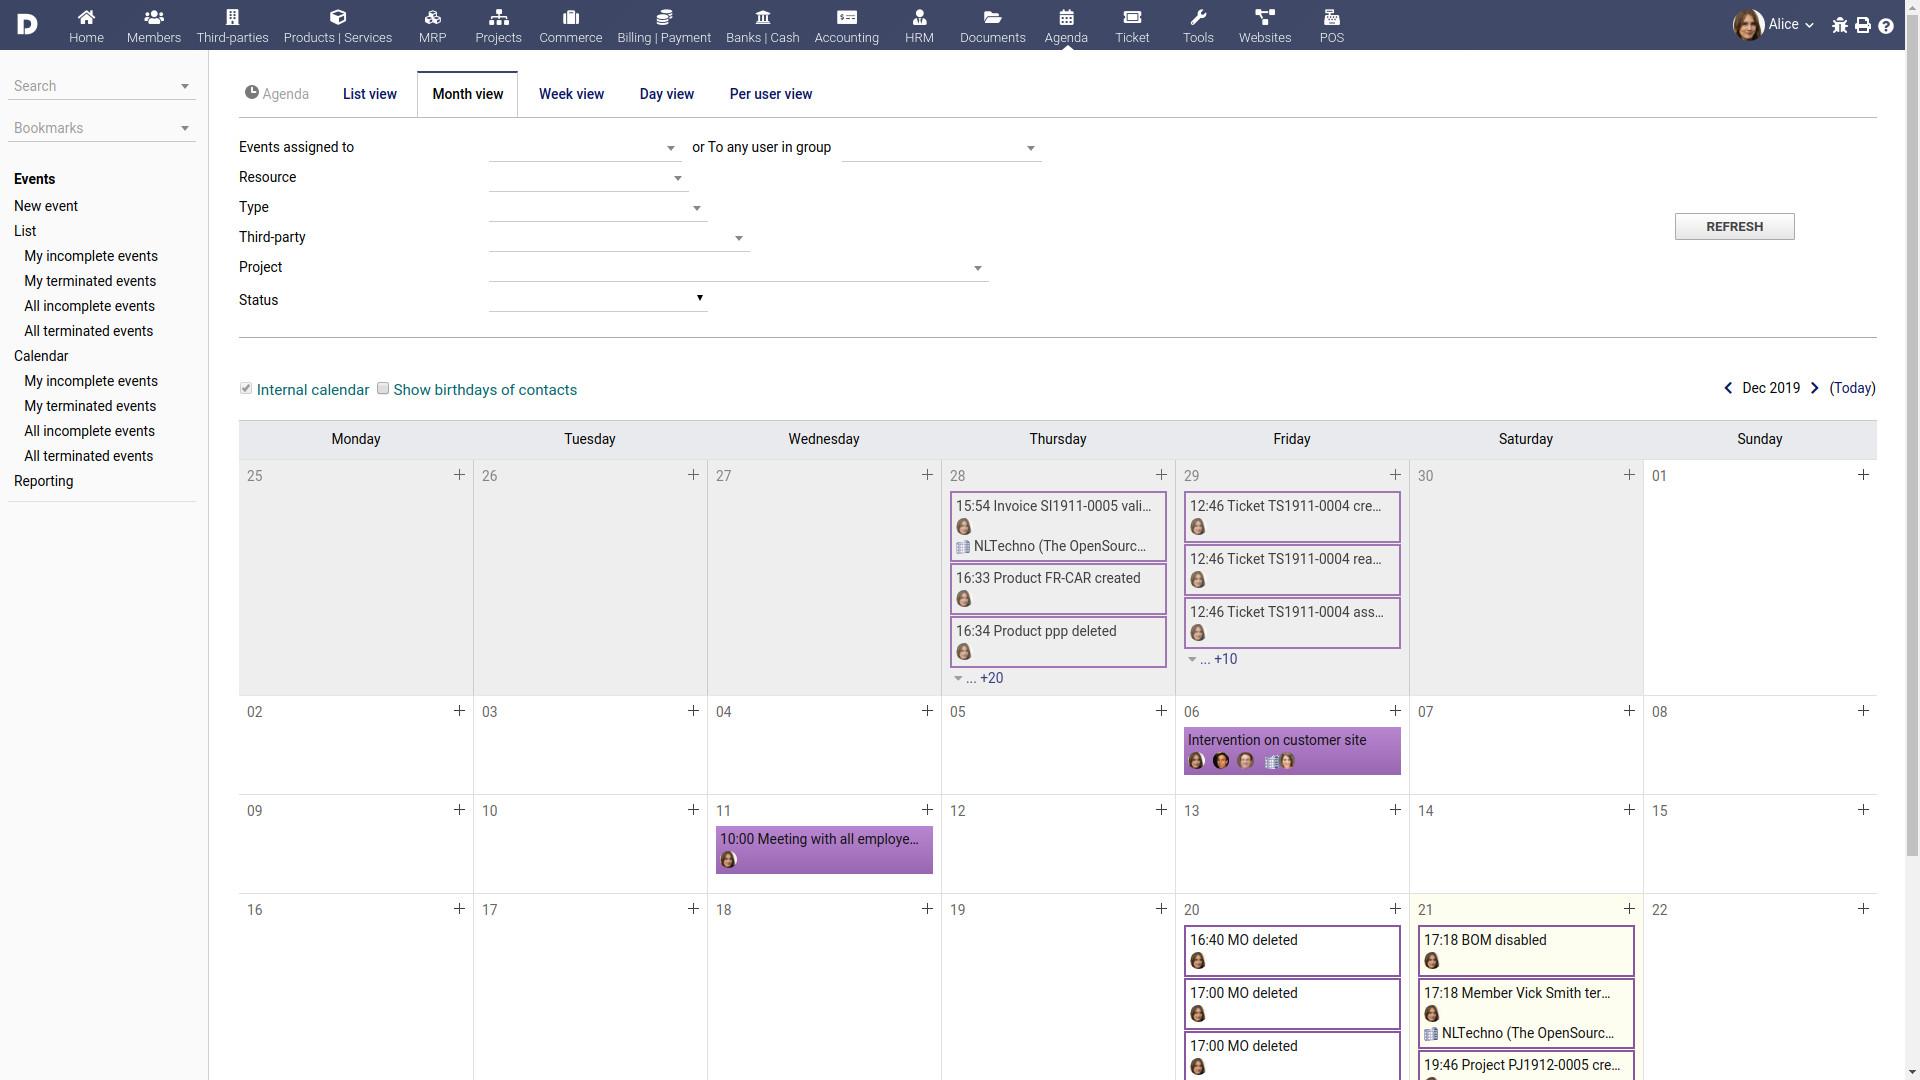 DoliCloud ERP CRM - The calendars